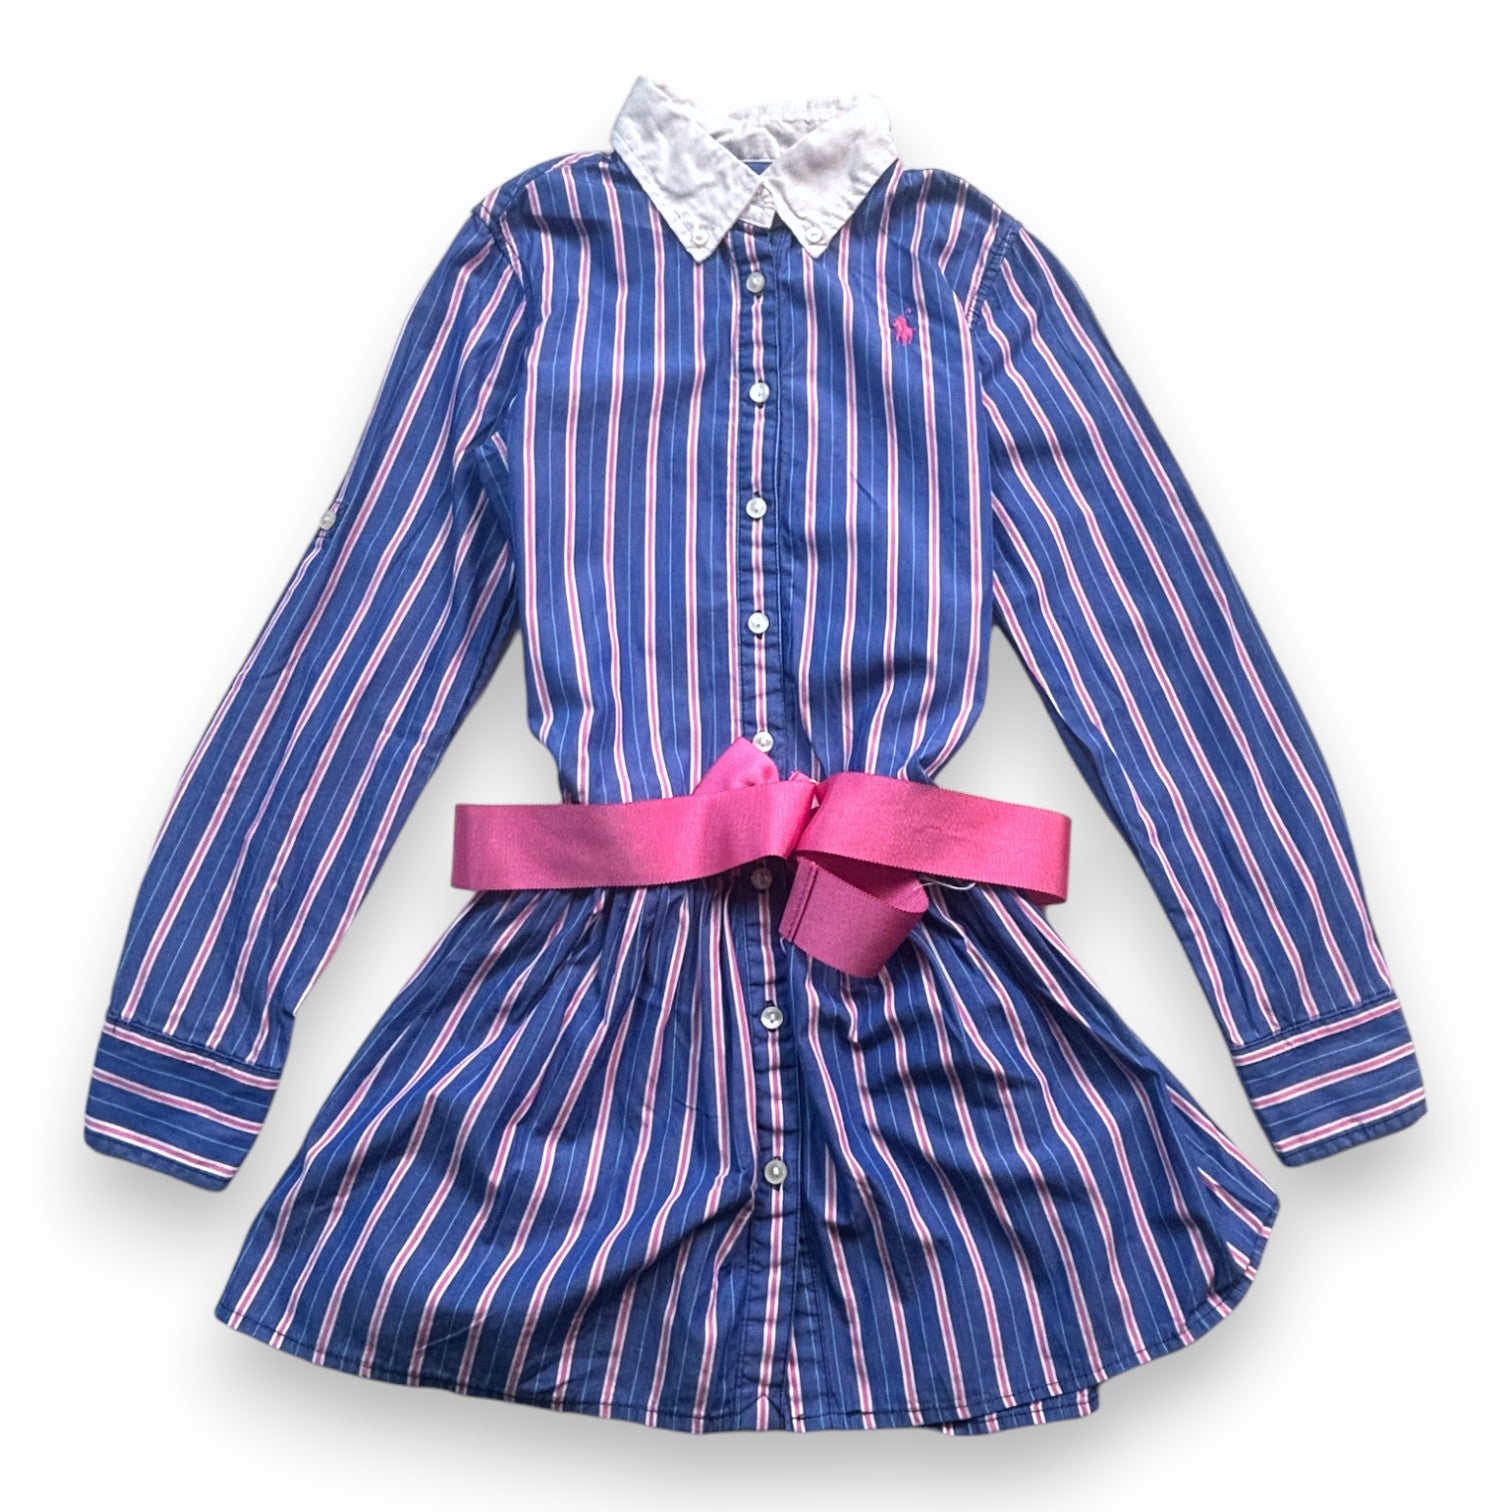 RALPH LAUREN - Robe chemise bleue à rayures roses - 7 ans